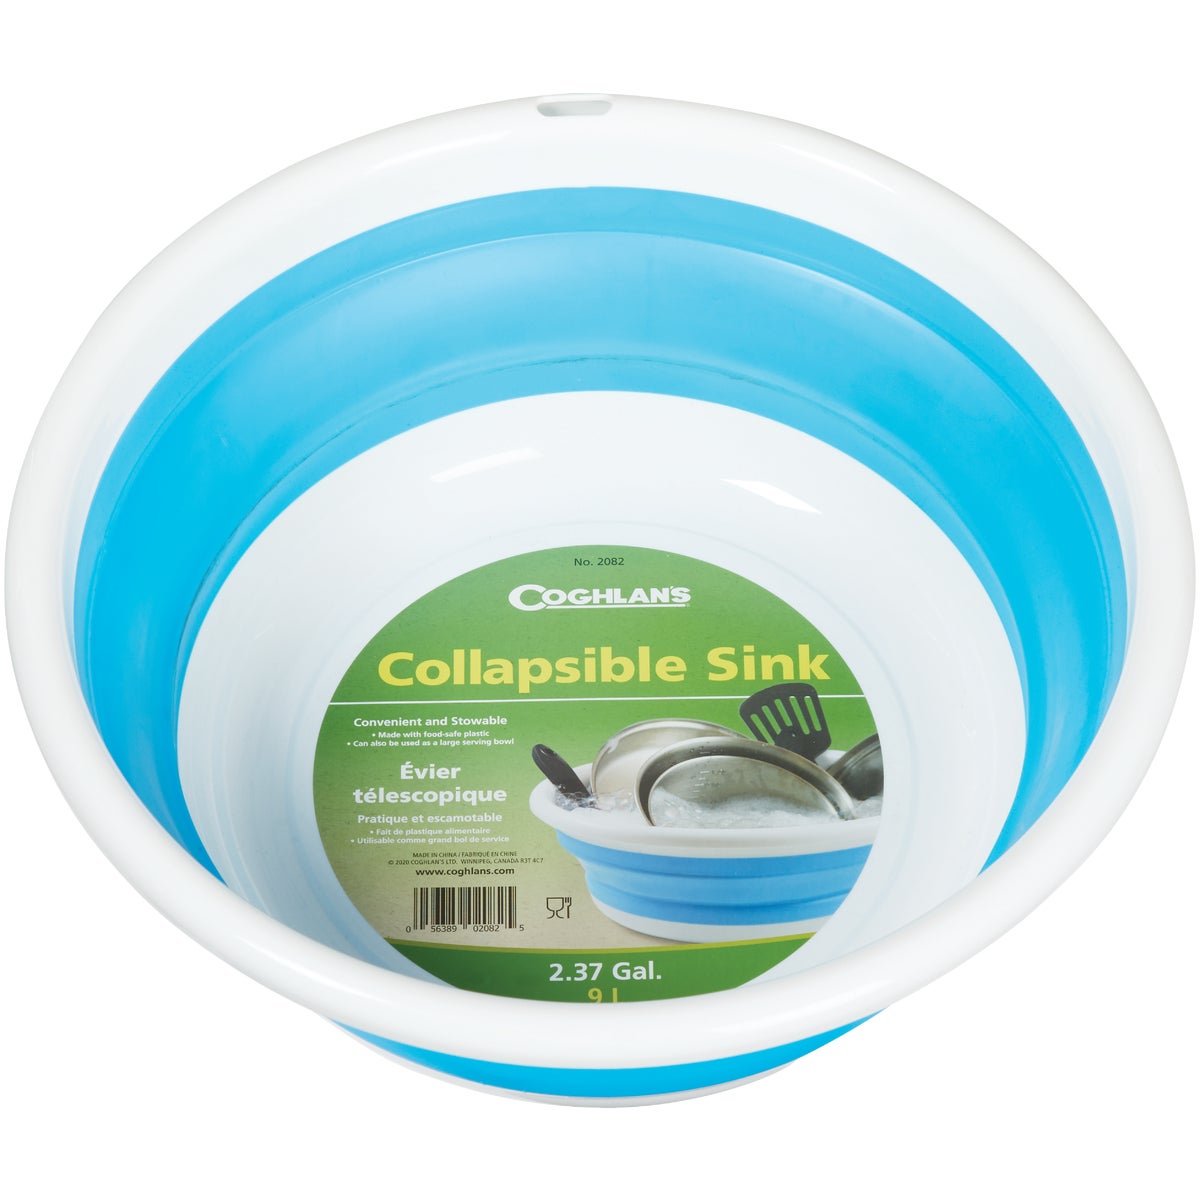 Coghlans 9 L. Blue & White Plastic Collapsible Sink